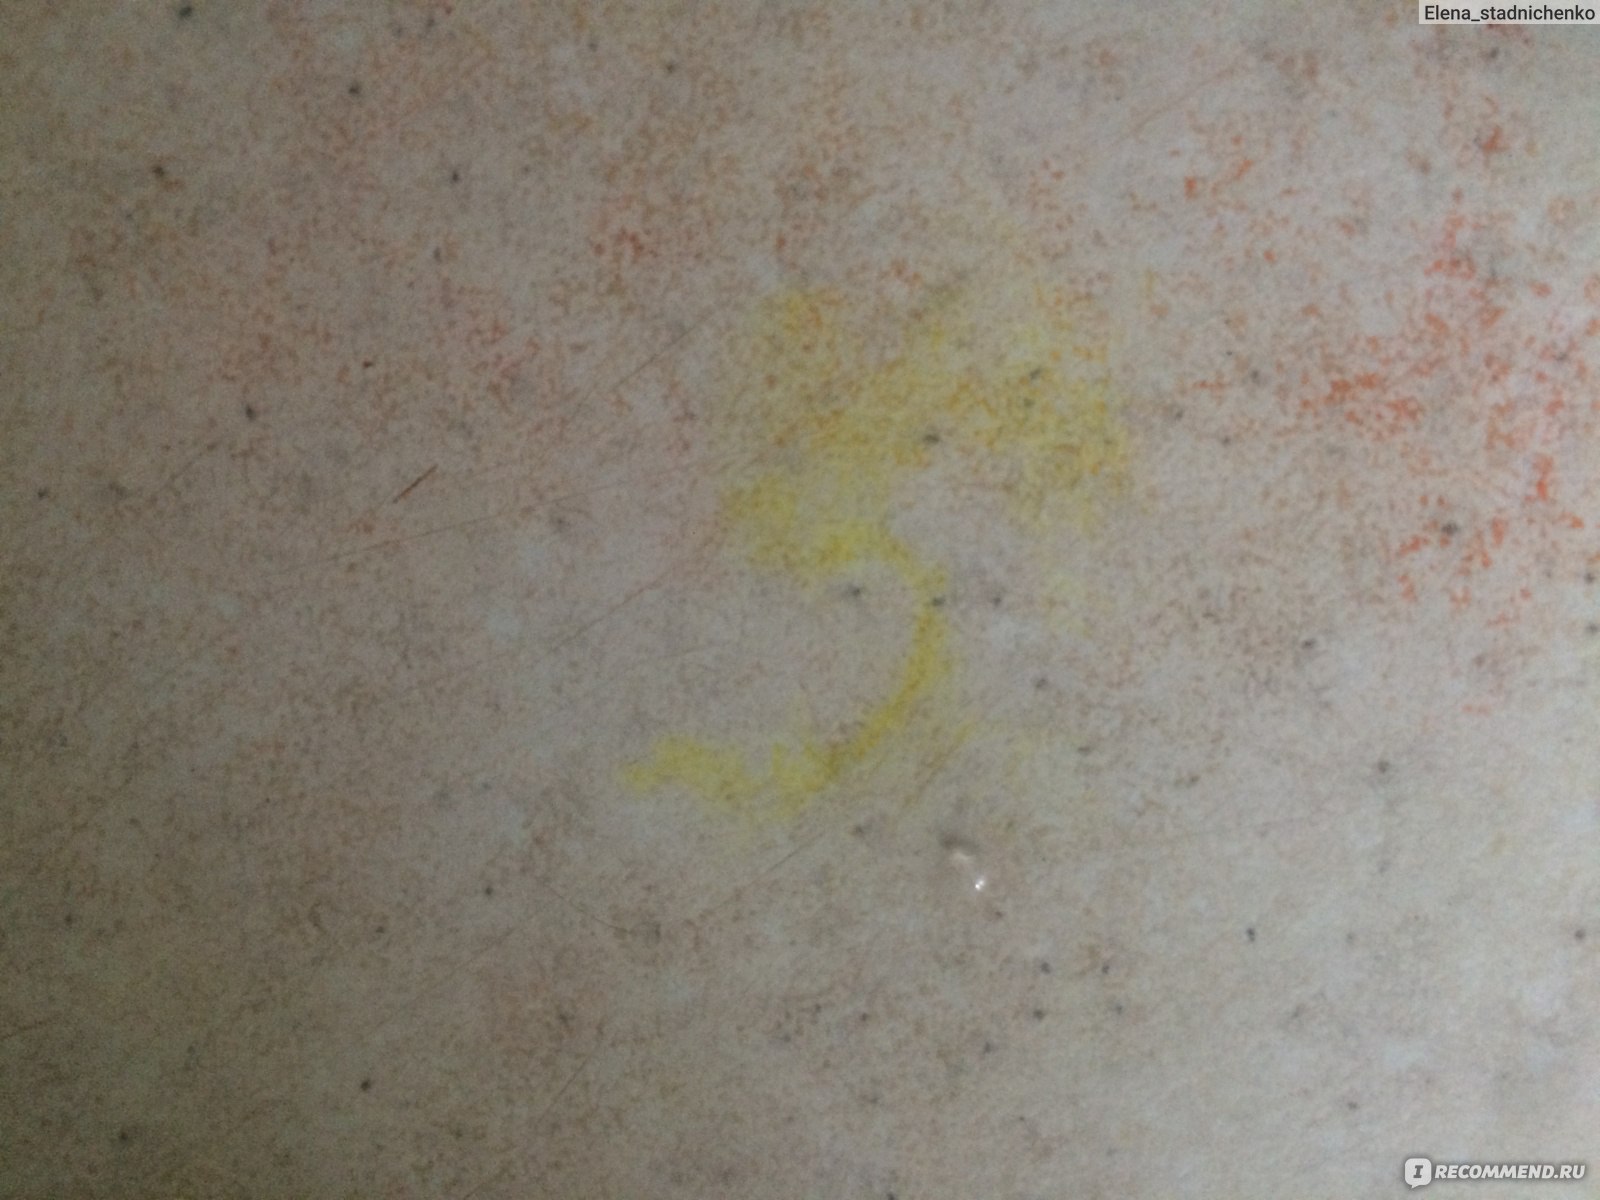 Вижу желтое пятно. Желтое пятно. Пятна на столешнице. На ноге образовалось желтое пятно. На линолиуме жёлтое пятно.